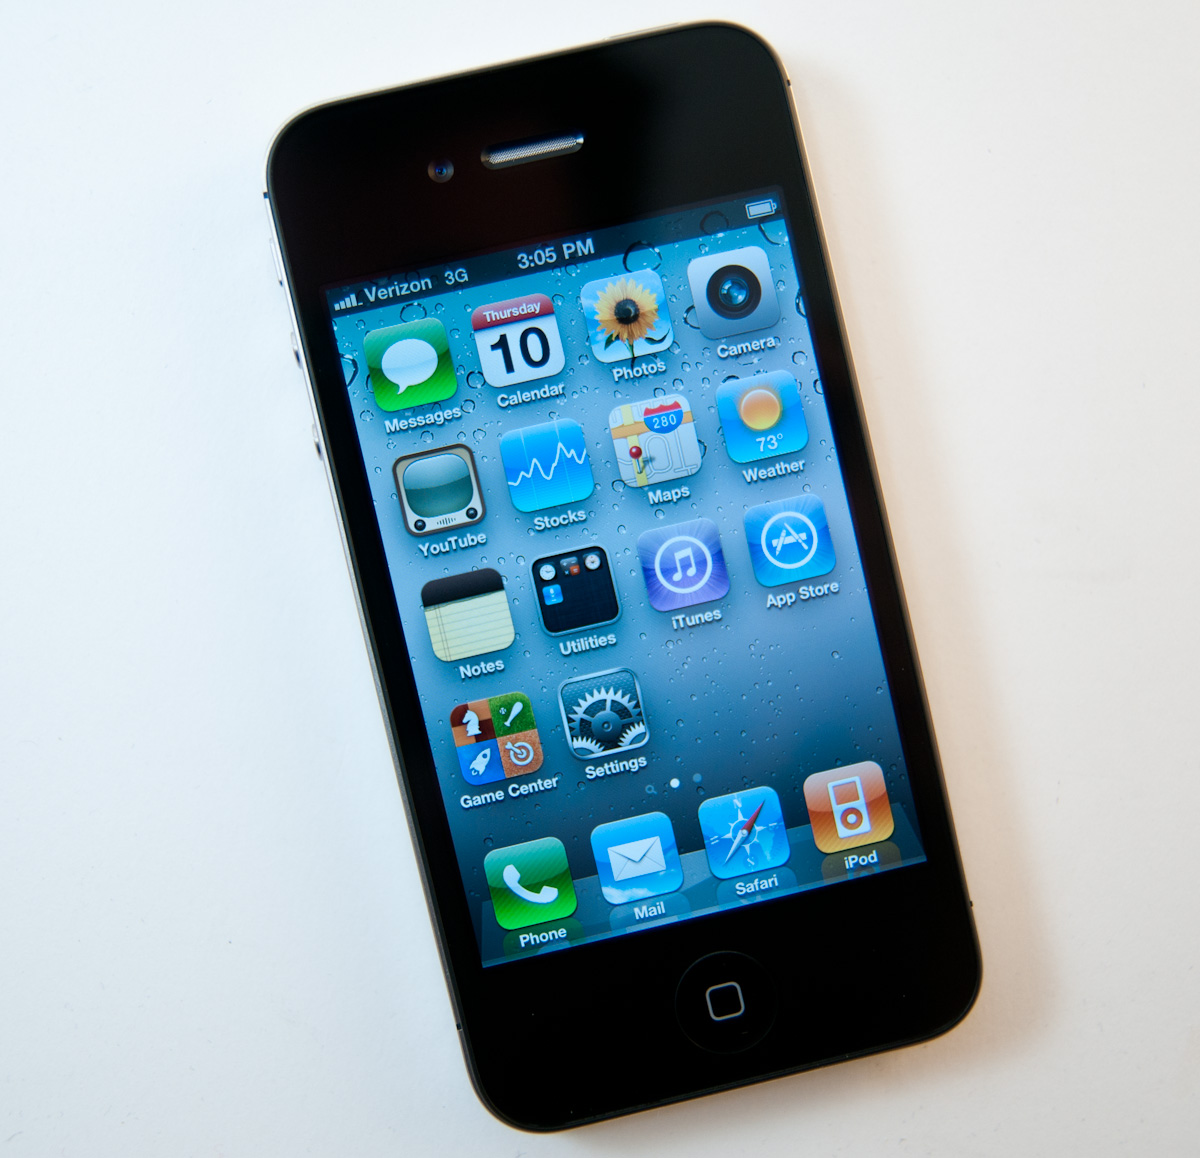 Verizon iPhone 4: Thoroughly Reviewed